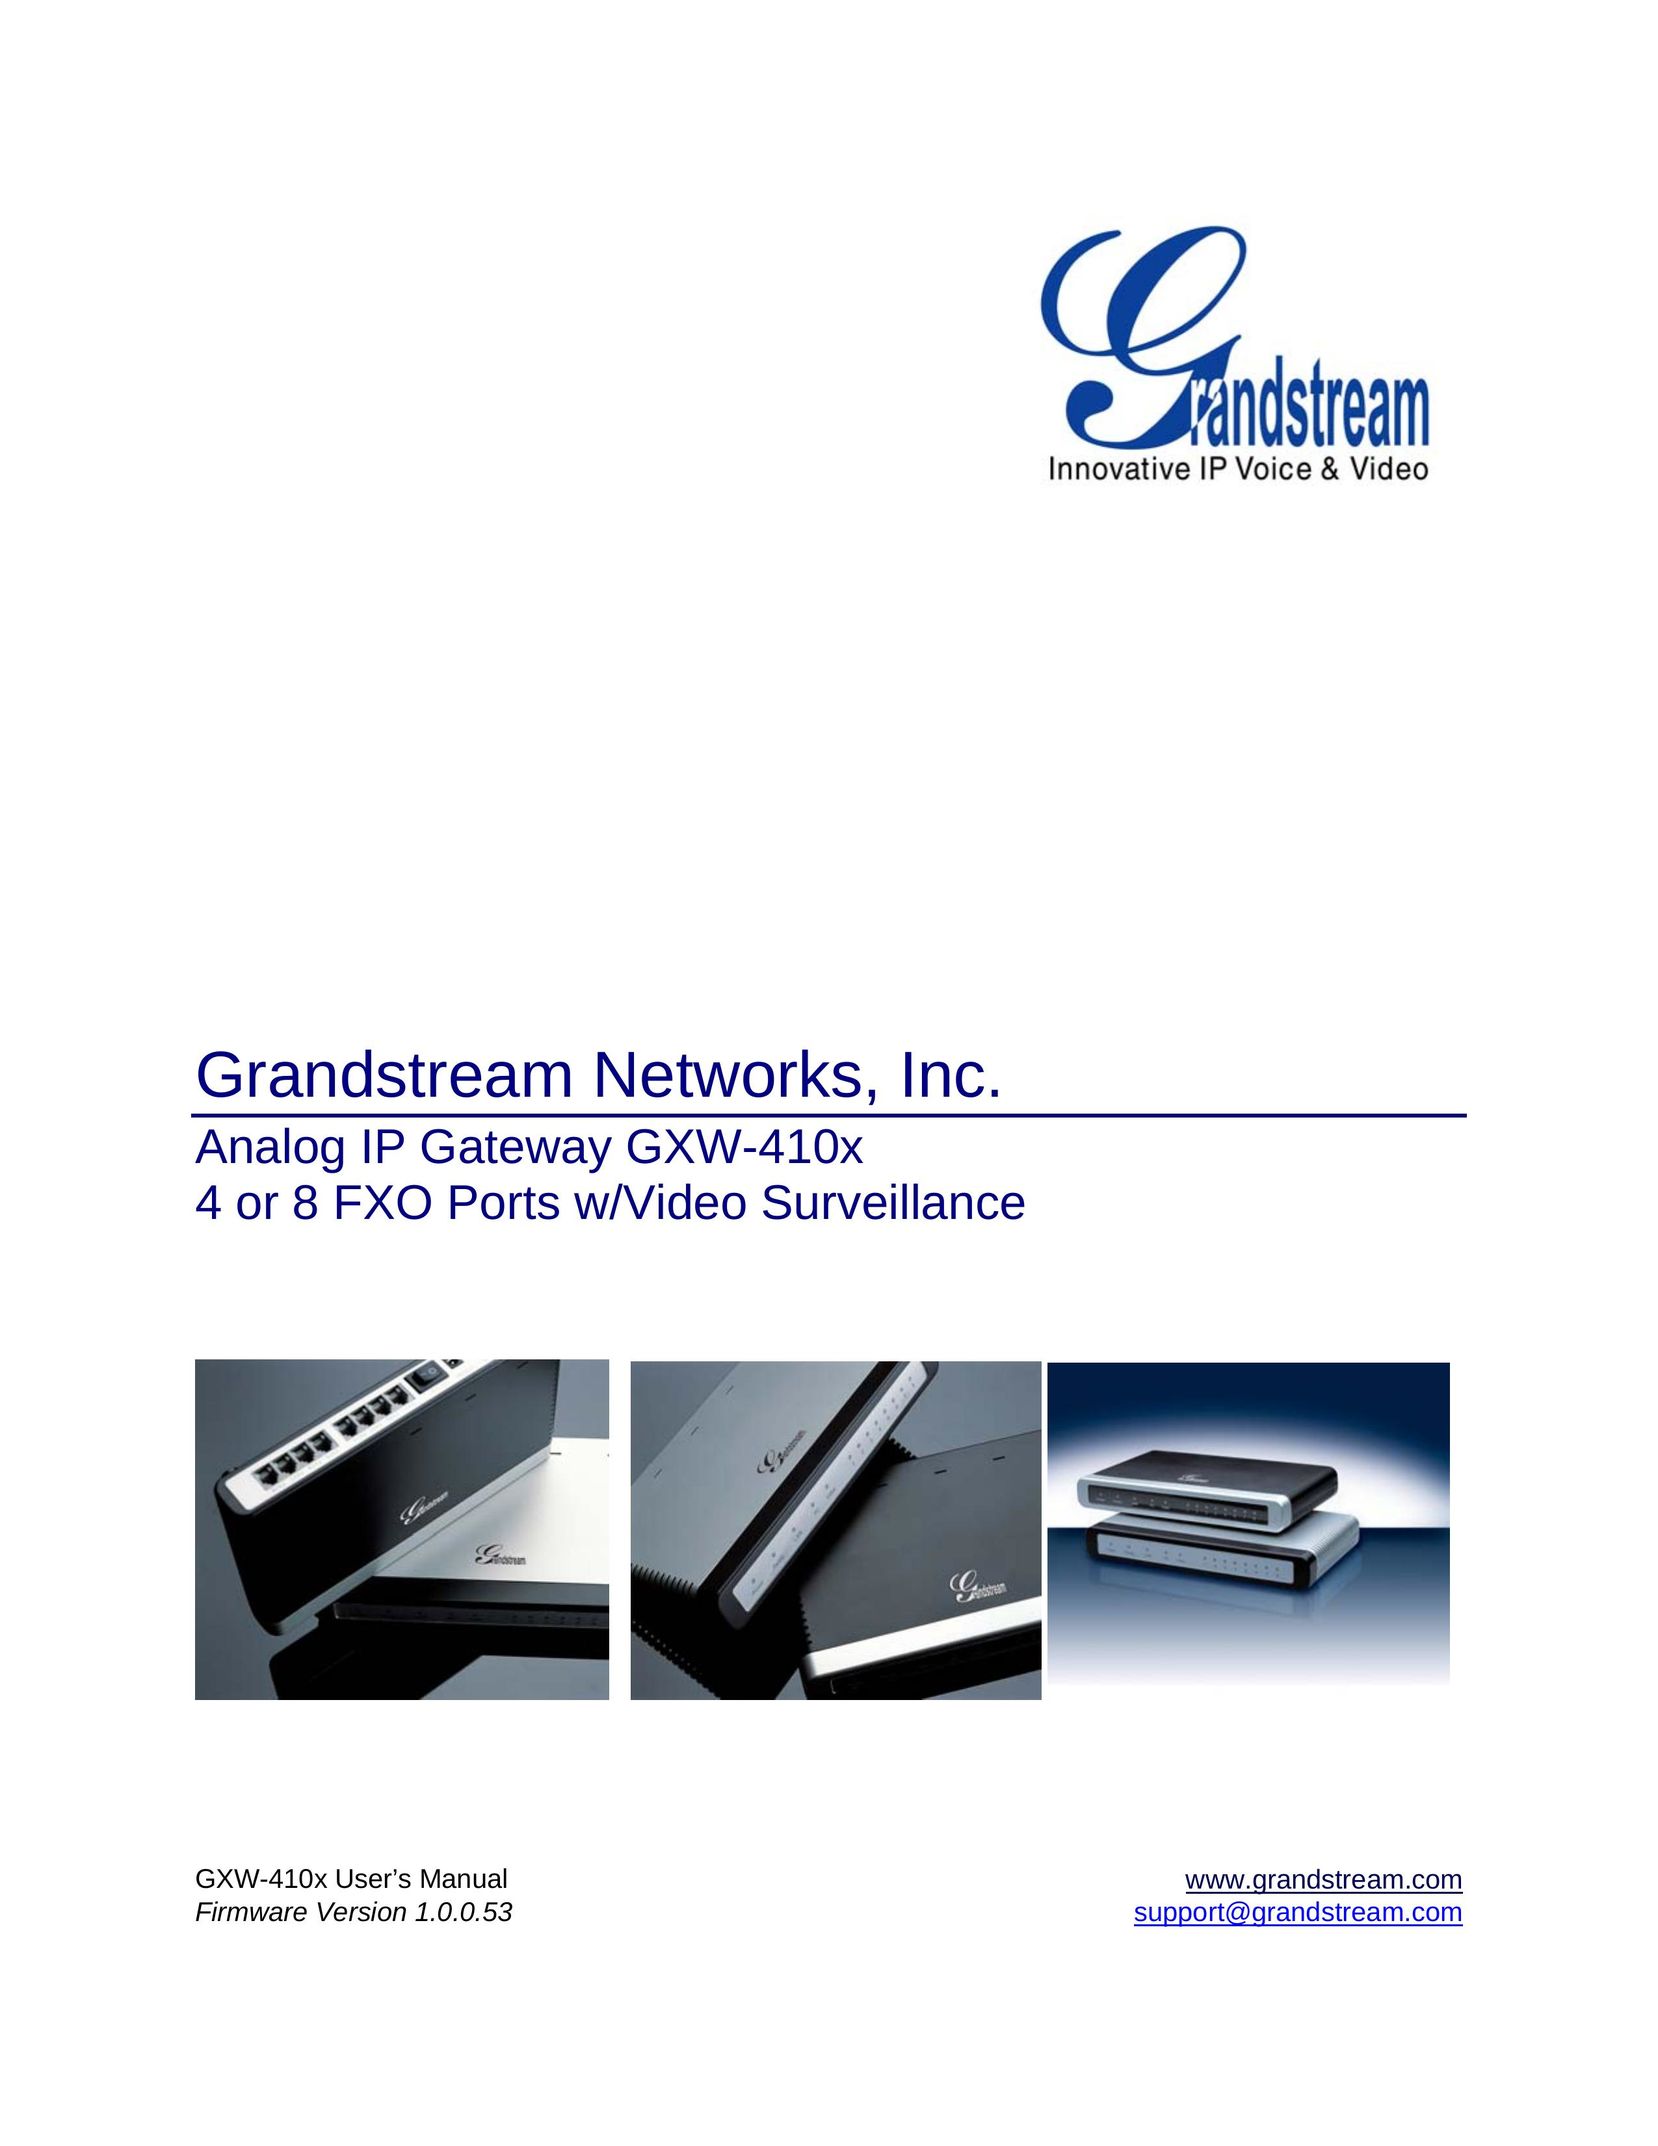 Grandstream Networks GXW-410x Network Hardware User Manual